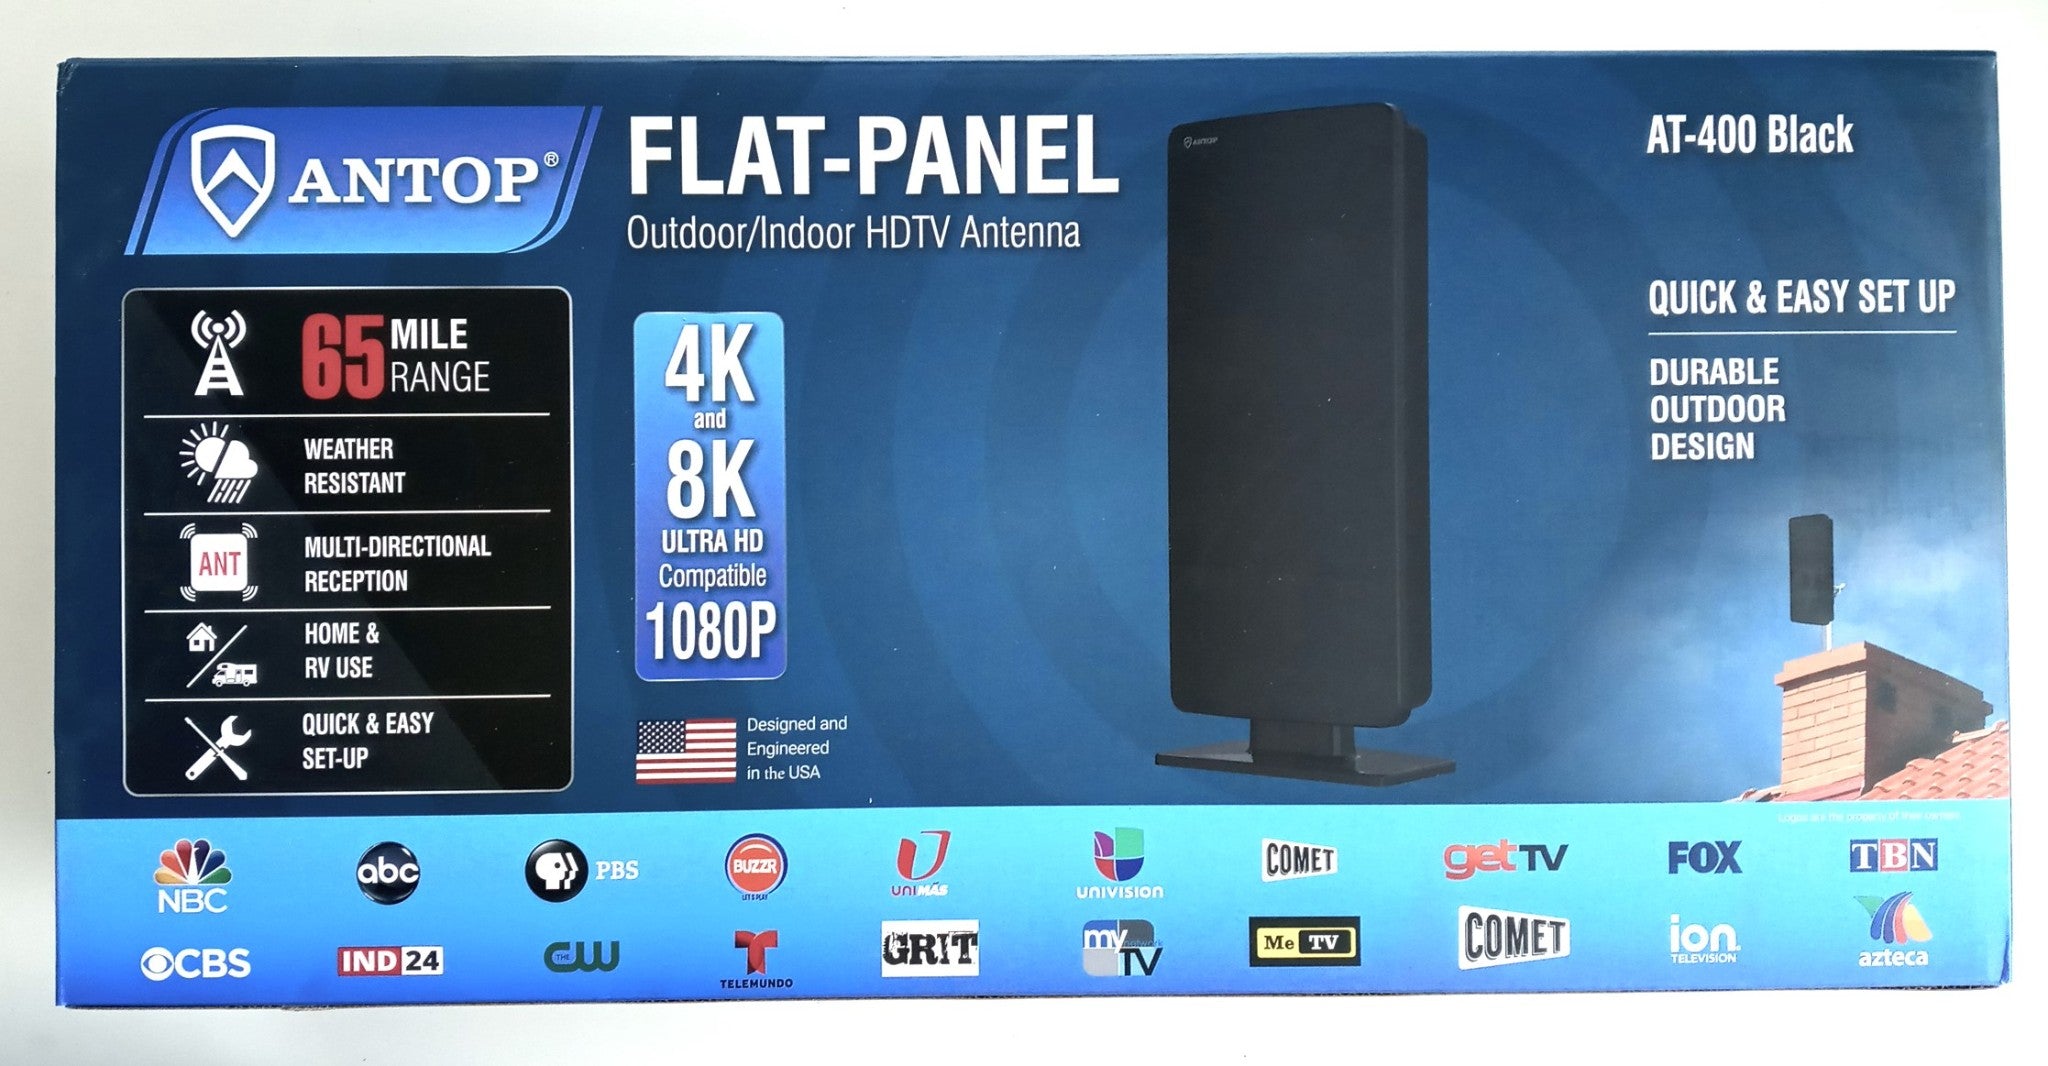 Antop AT-400 Flat-Panel Outdoor/Indoor HDTV Antenna 1080p 4k & 8k Compatible